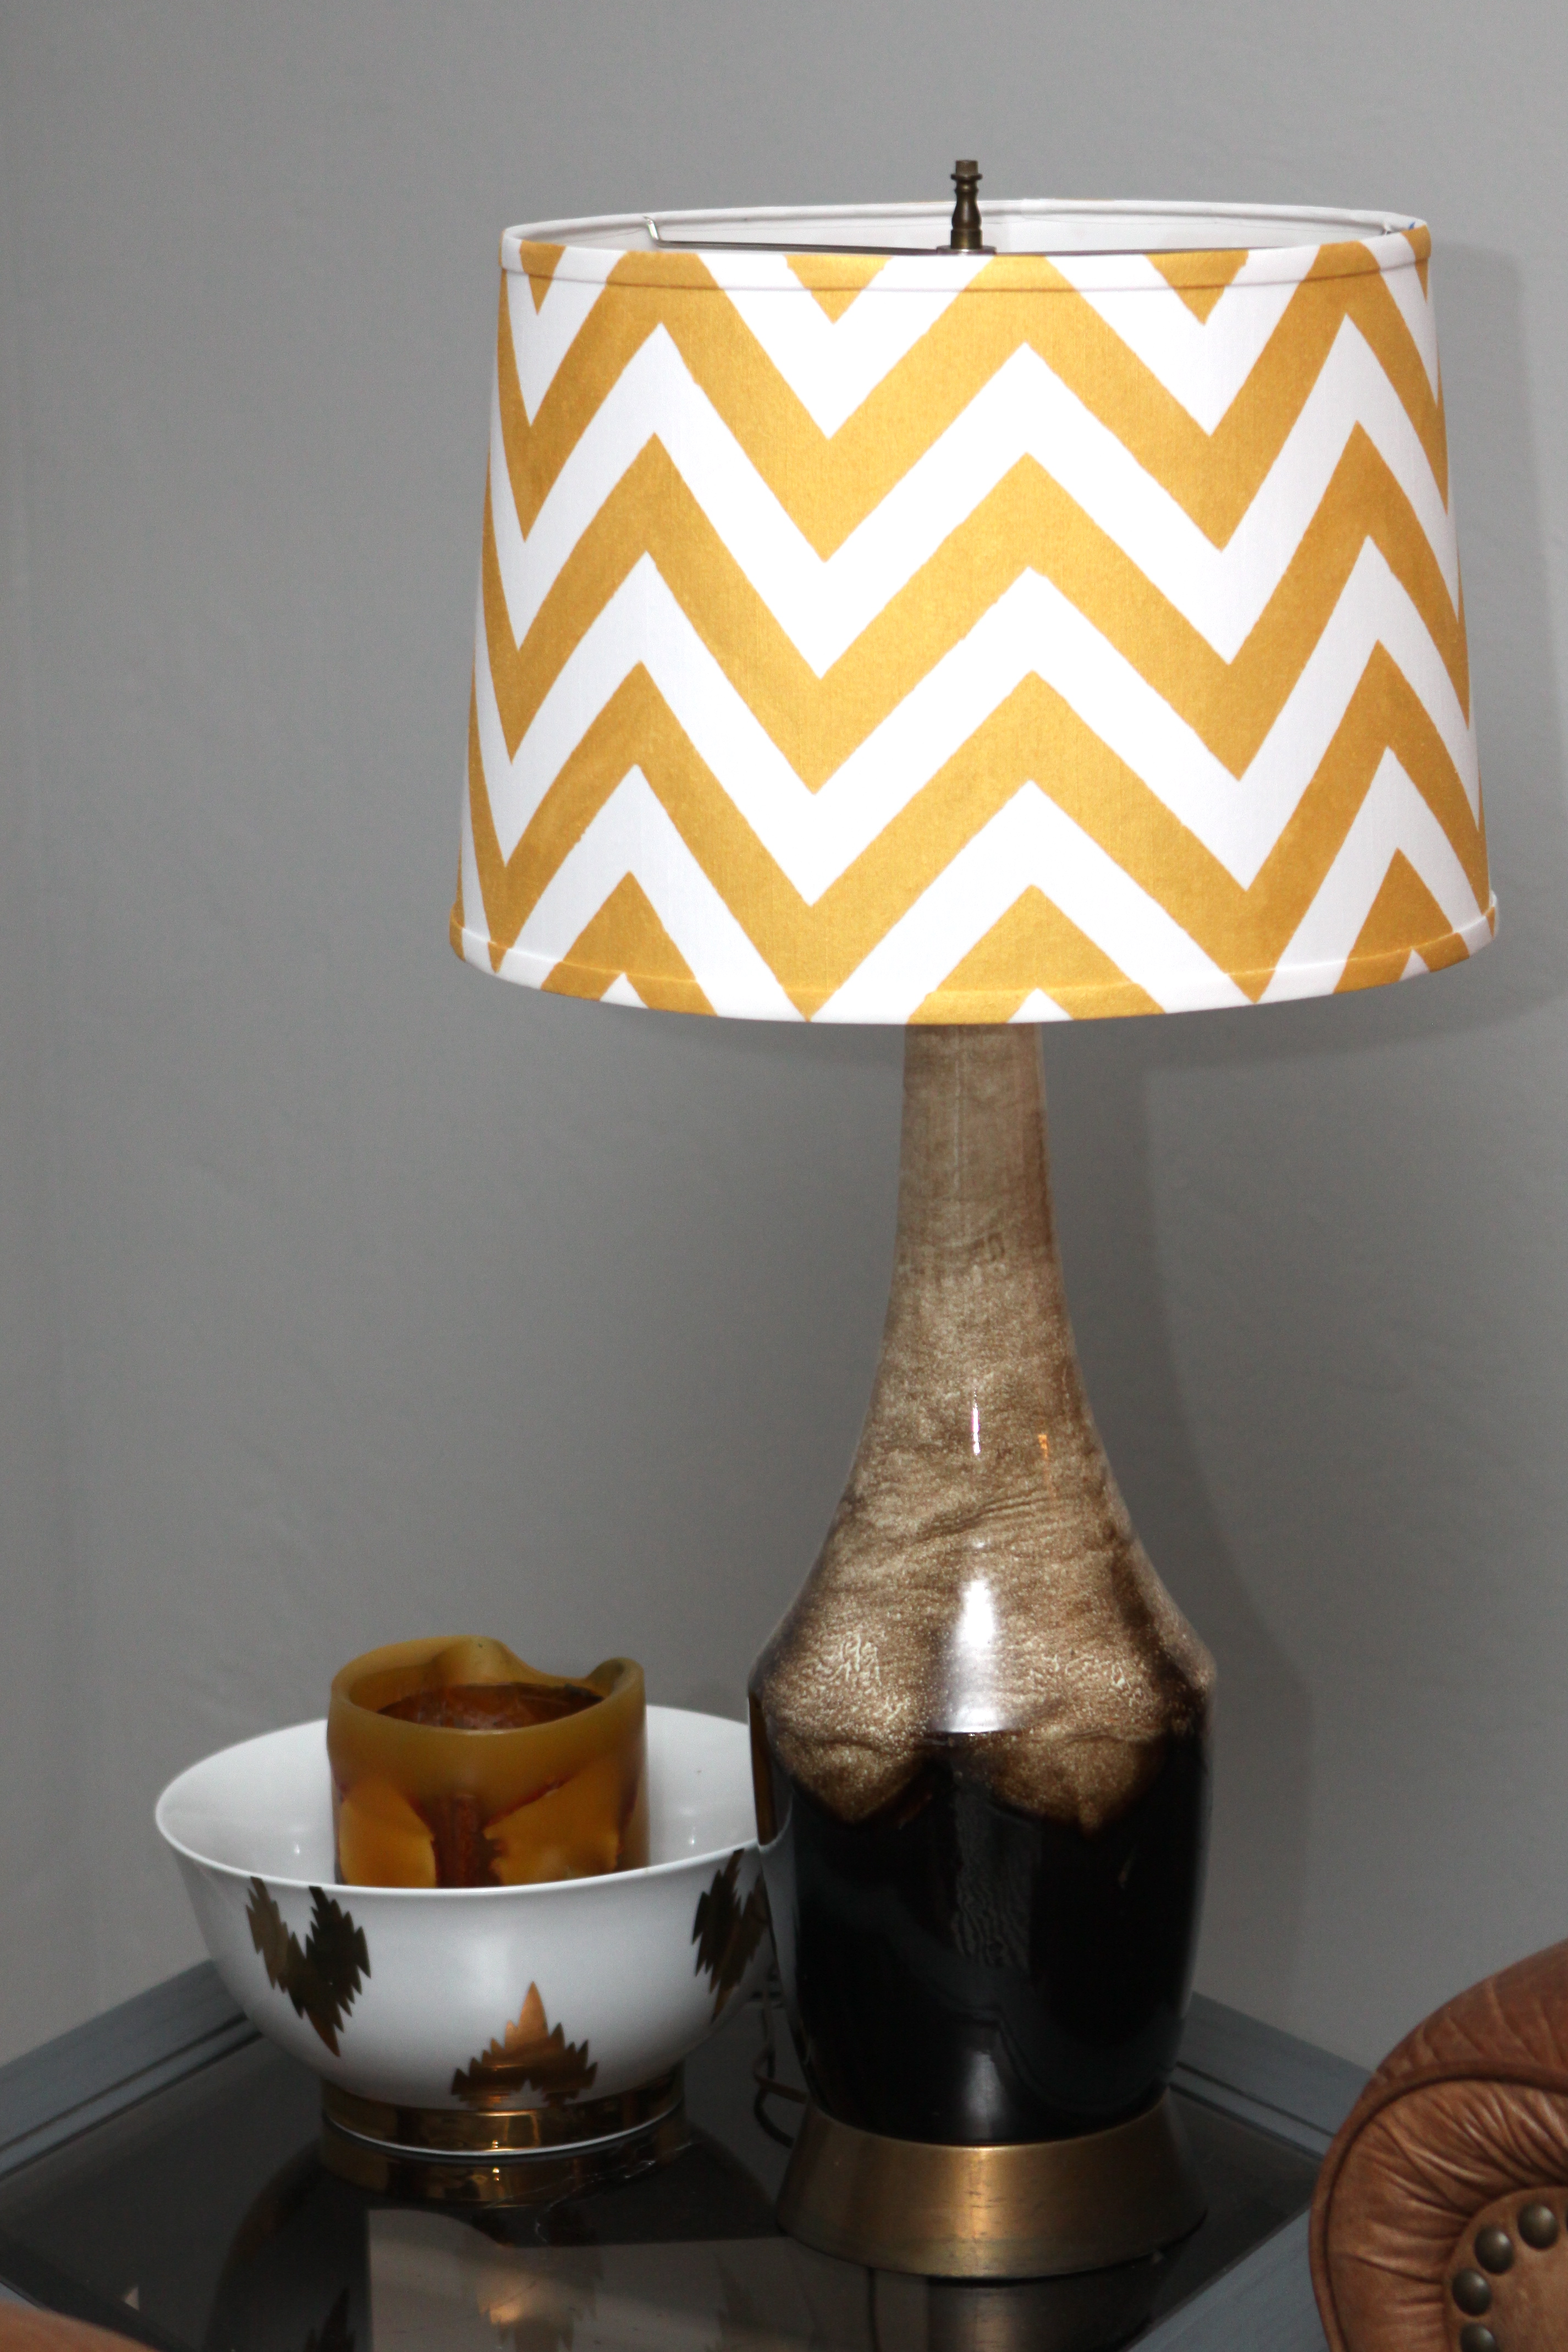 23 Ways To Diy And Redo A Lampshade, How To Make Homemade Lamp Shades